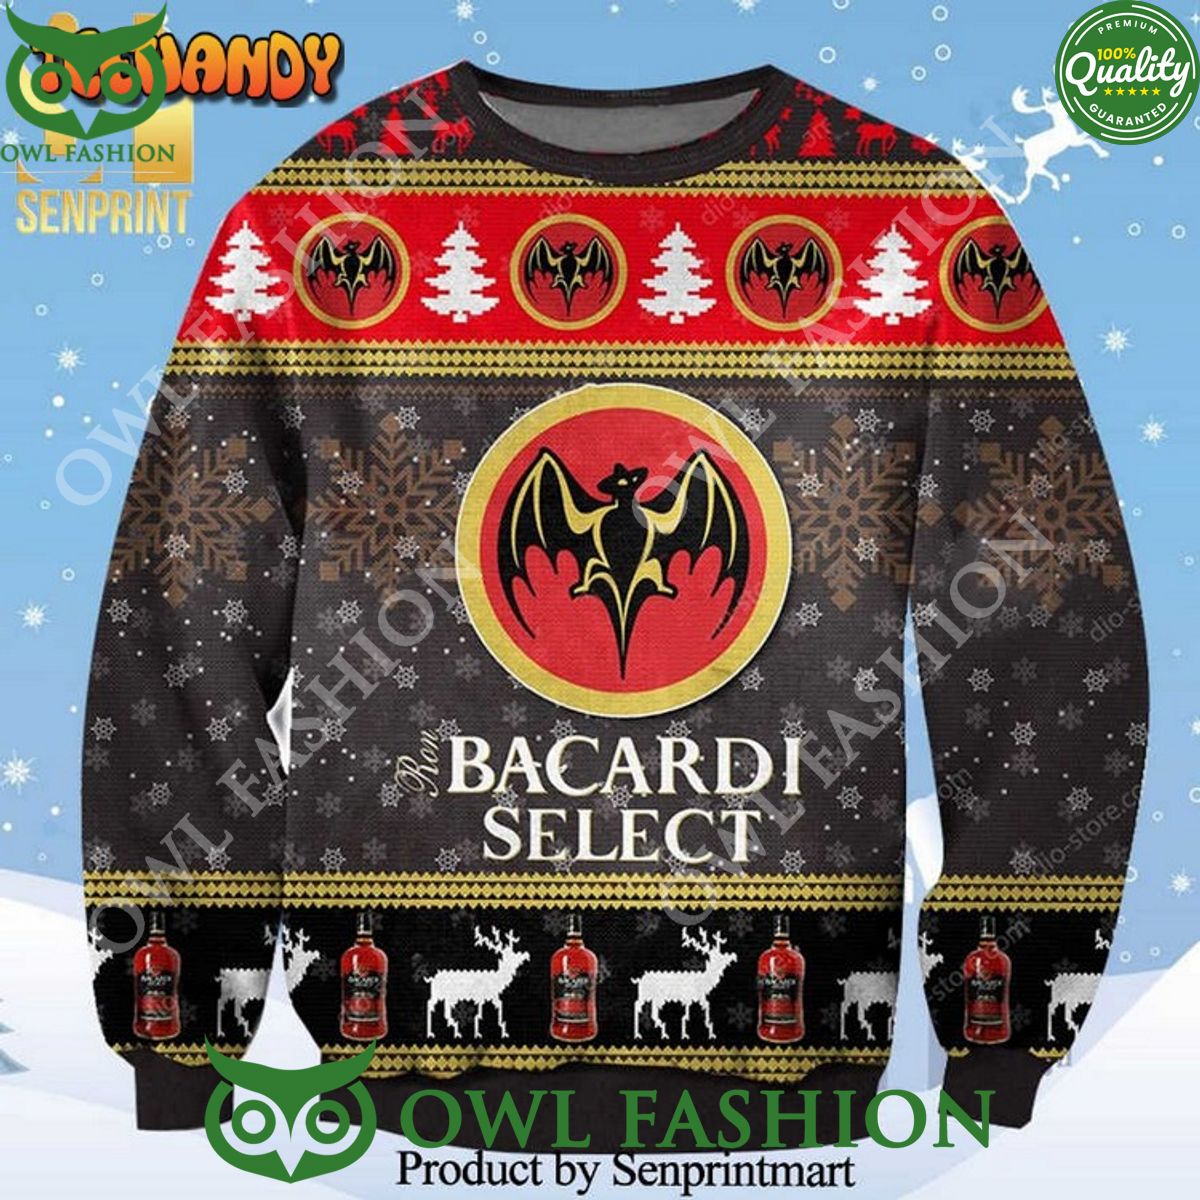 bacardi select rum knitted ugly christmas sweater 1 4Zb6o.jpg